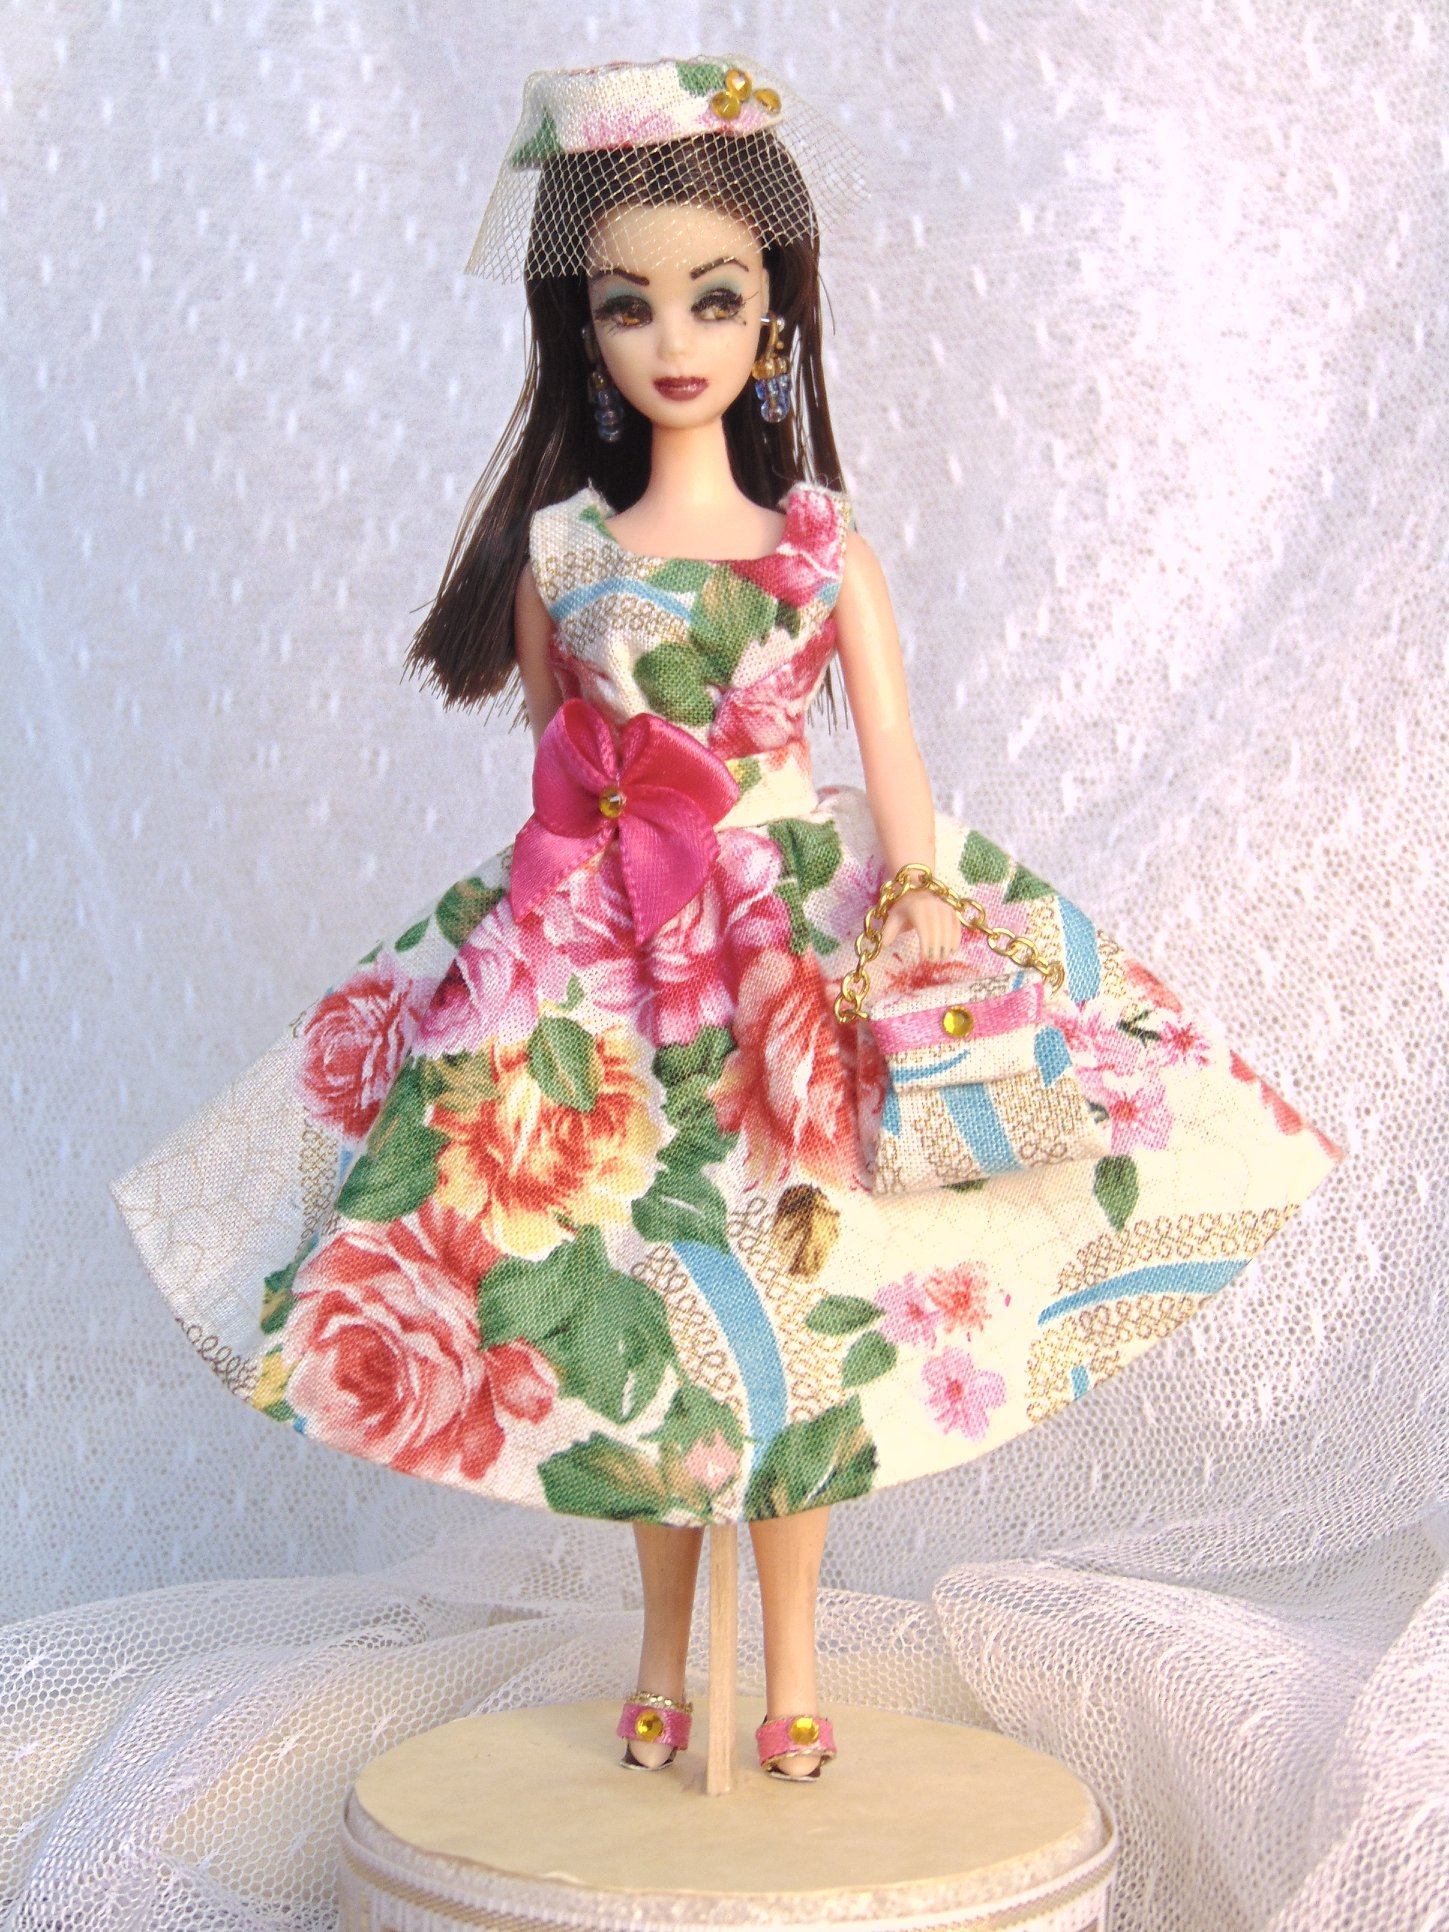 custom-handmade-dawn-dresses-barbie-dresses-jmb-designs-3.jpeg